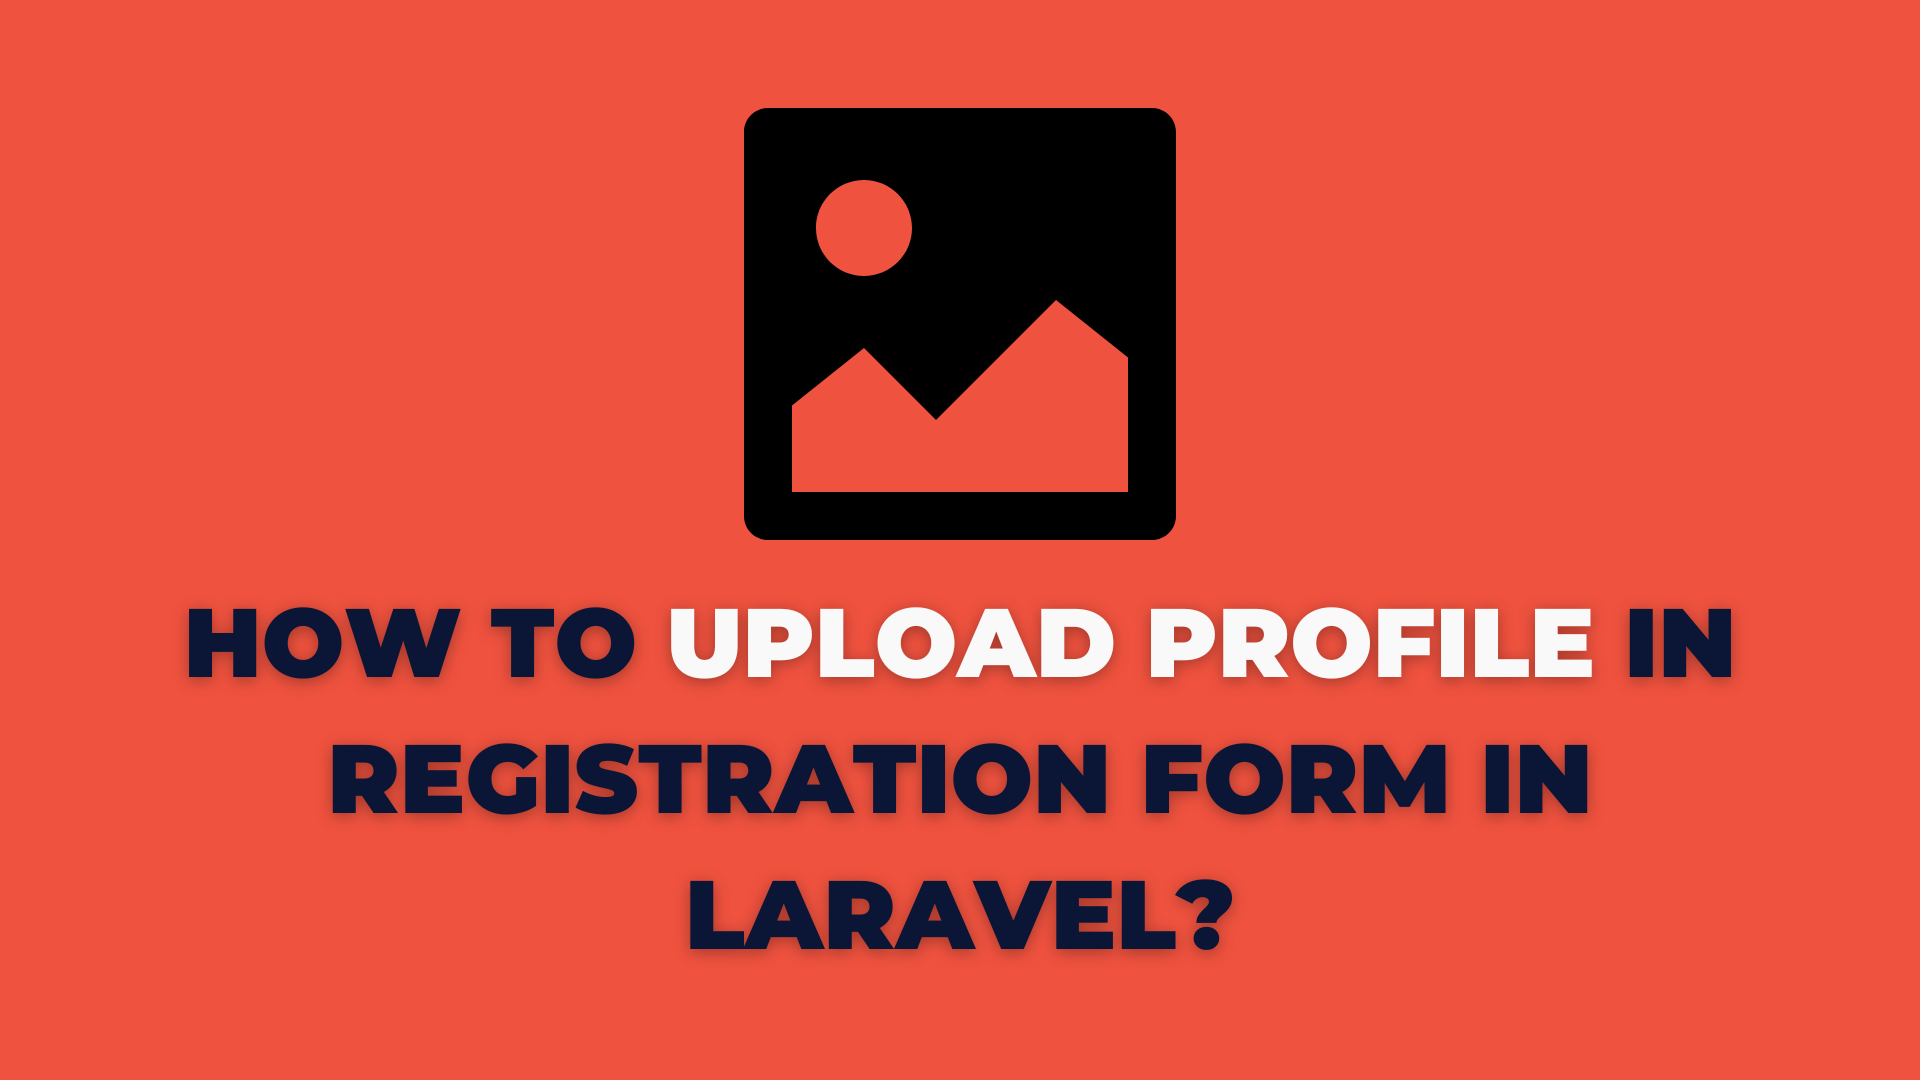 How to Upload Profile in Registration Form In Laravel